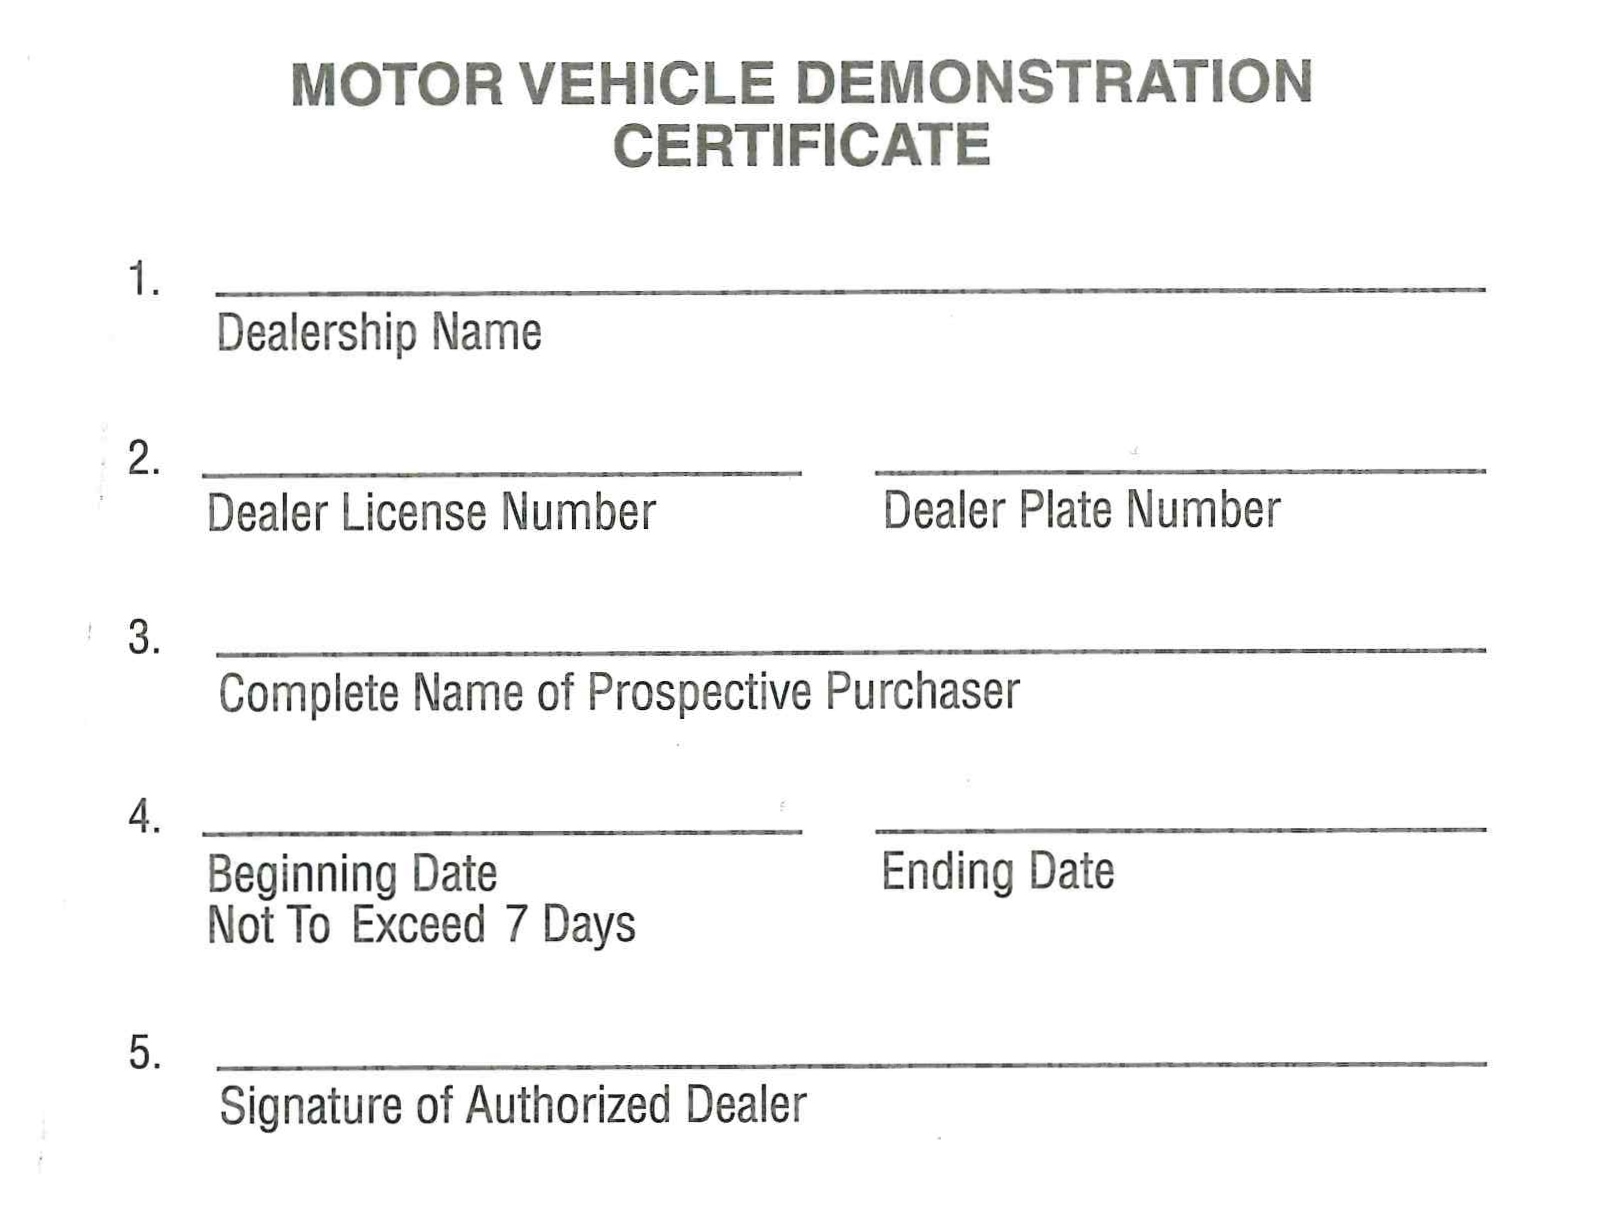 Download Motor Vehicle Demonstration Certificates South Carolina Automobile Dealers Association